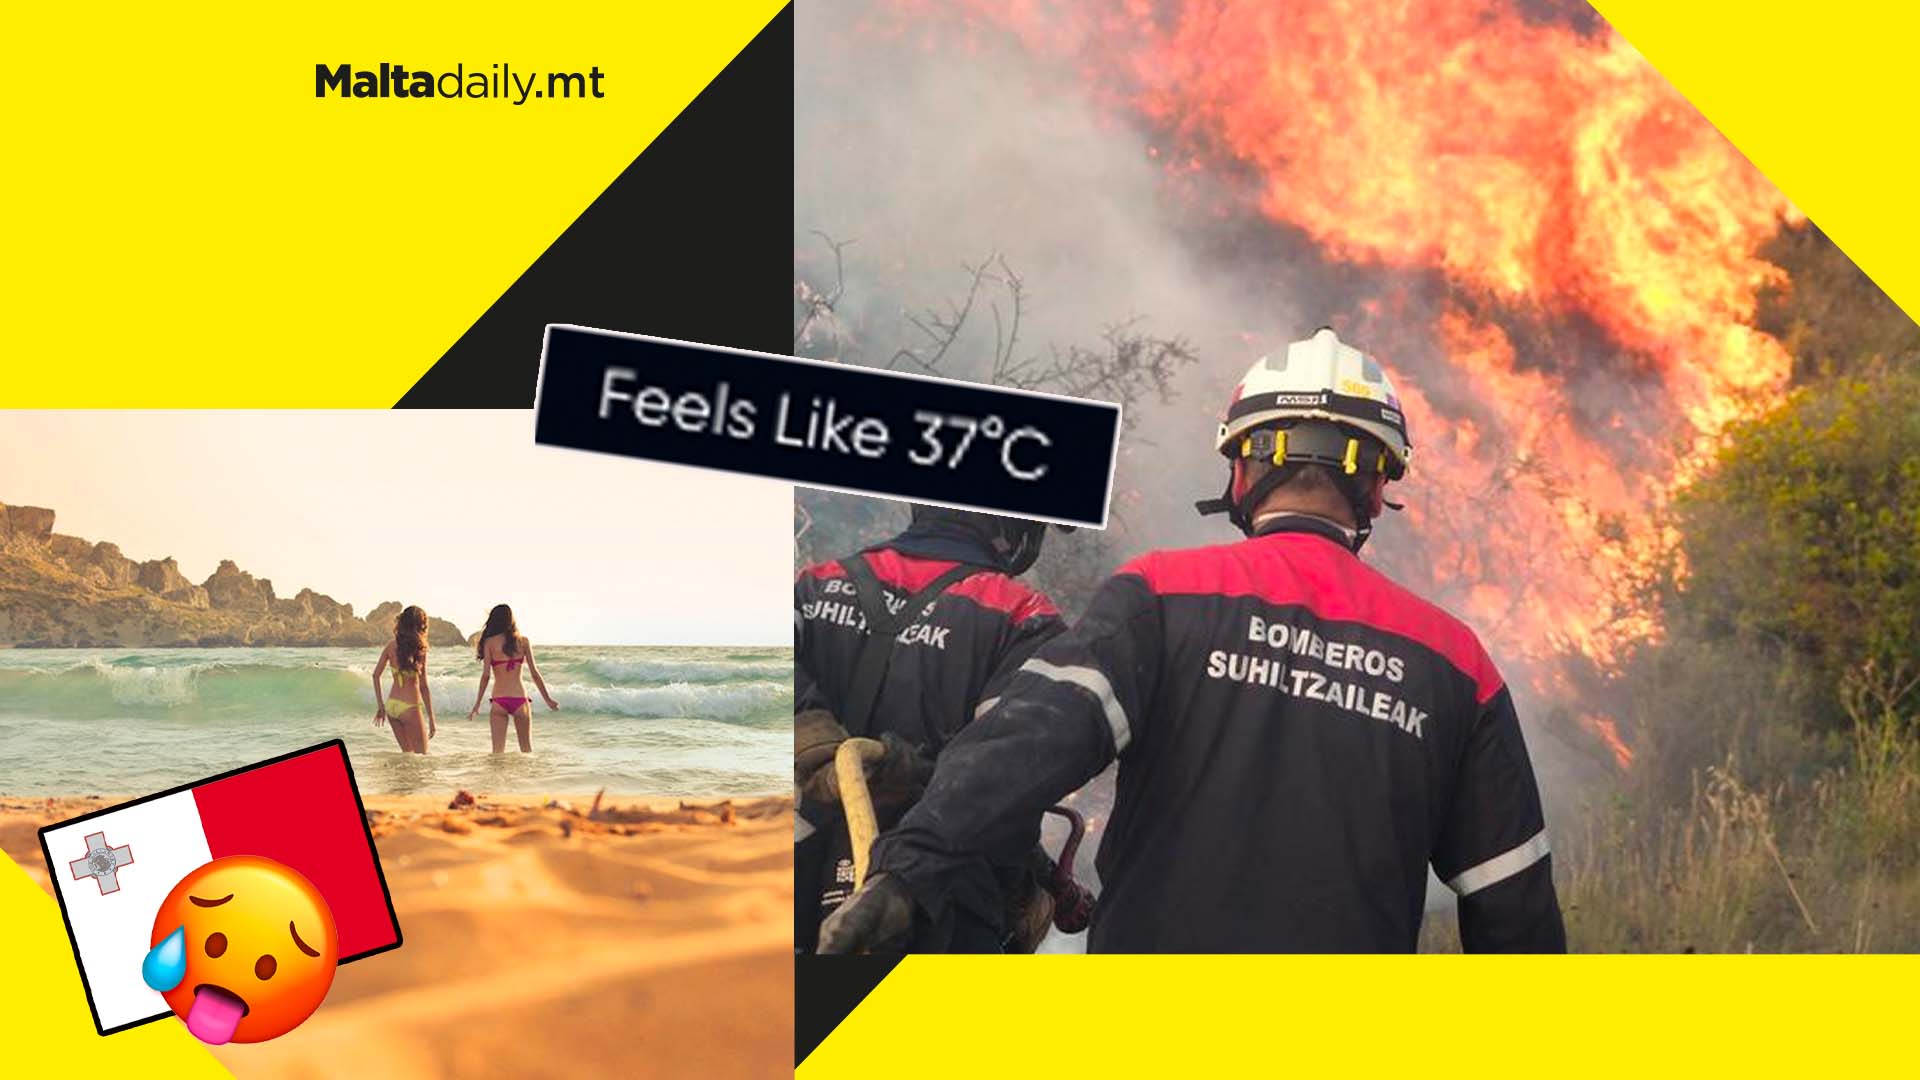 Record breaking heat waves hitting Europe; Malta braces for infernal week